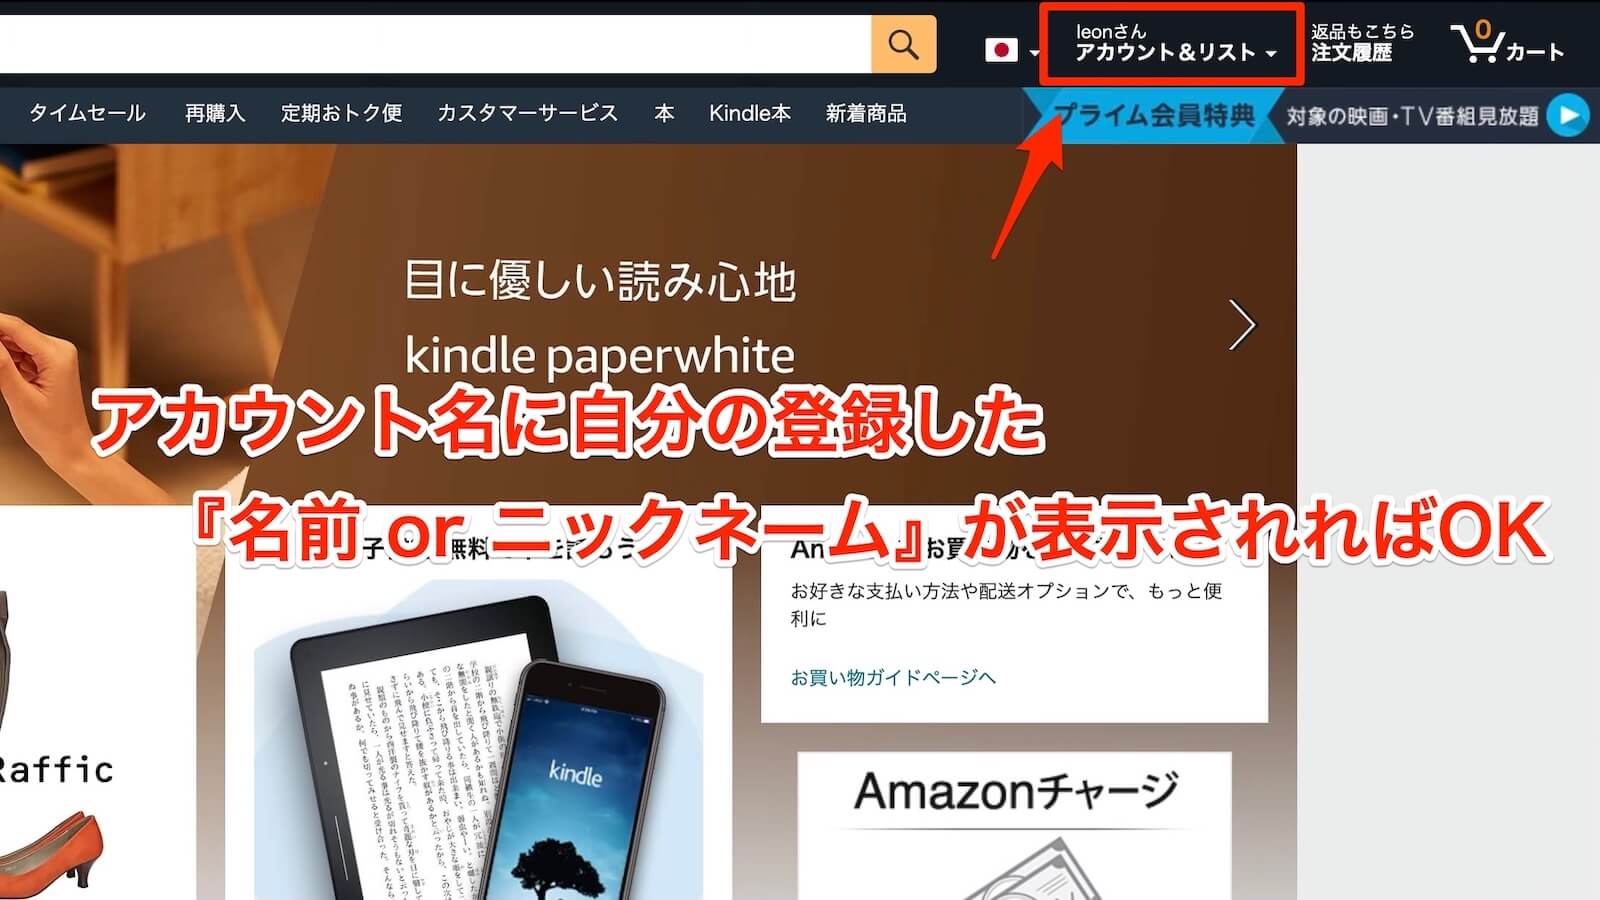 Amazon site screen capture